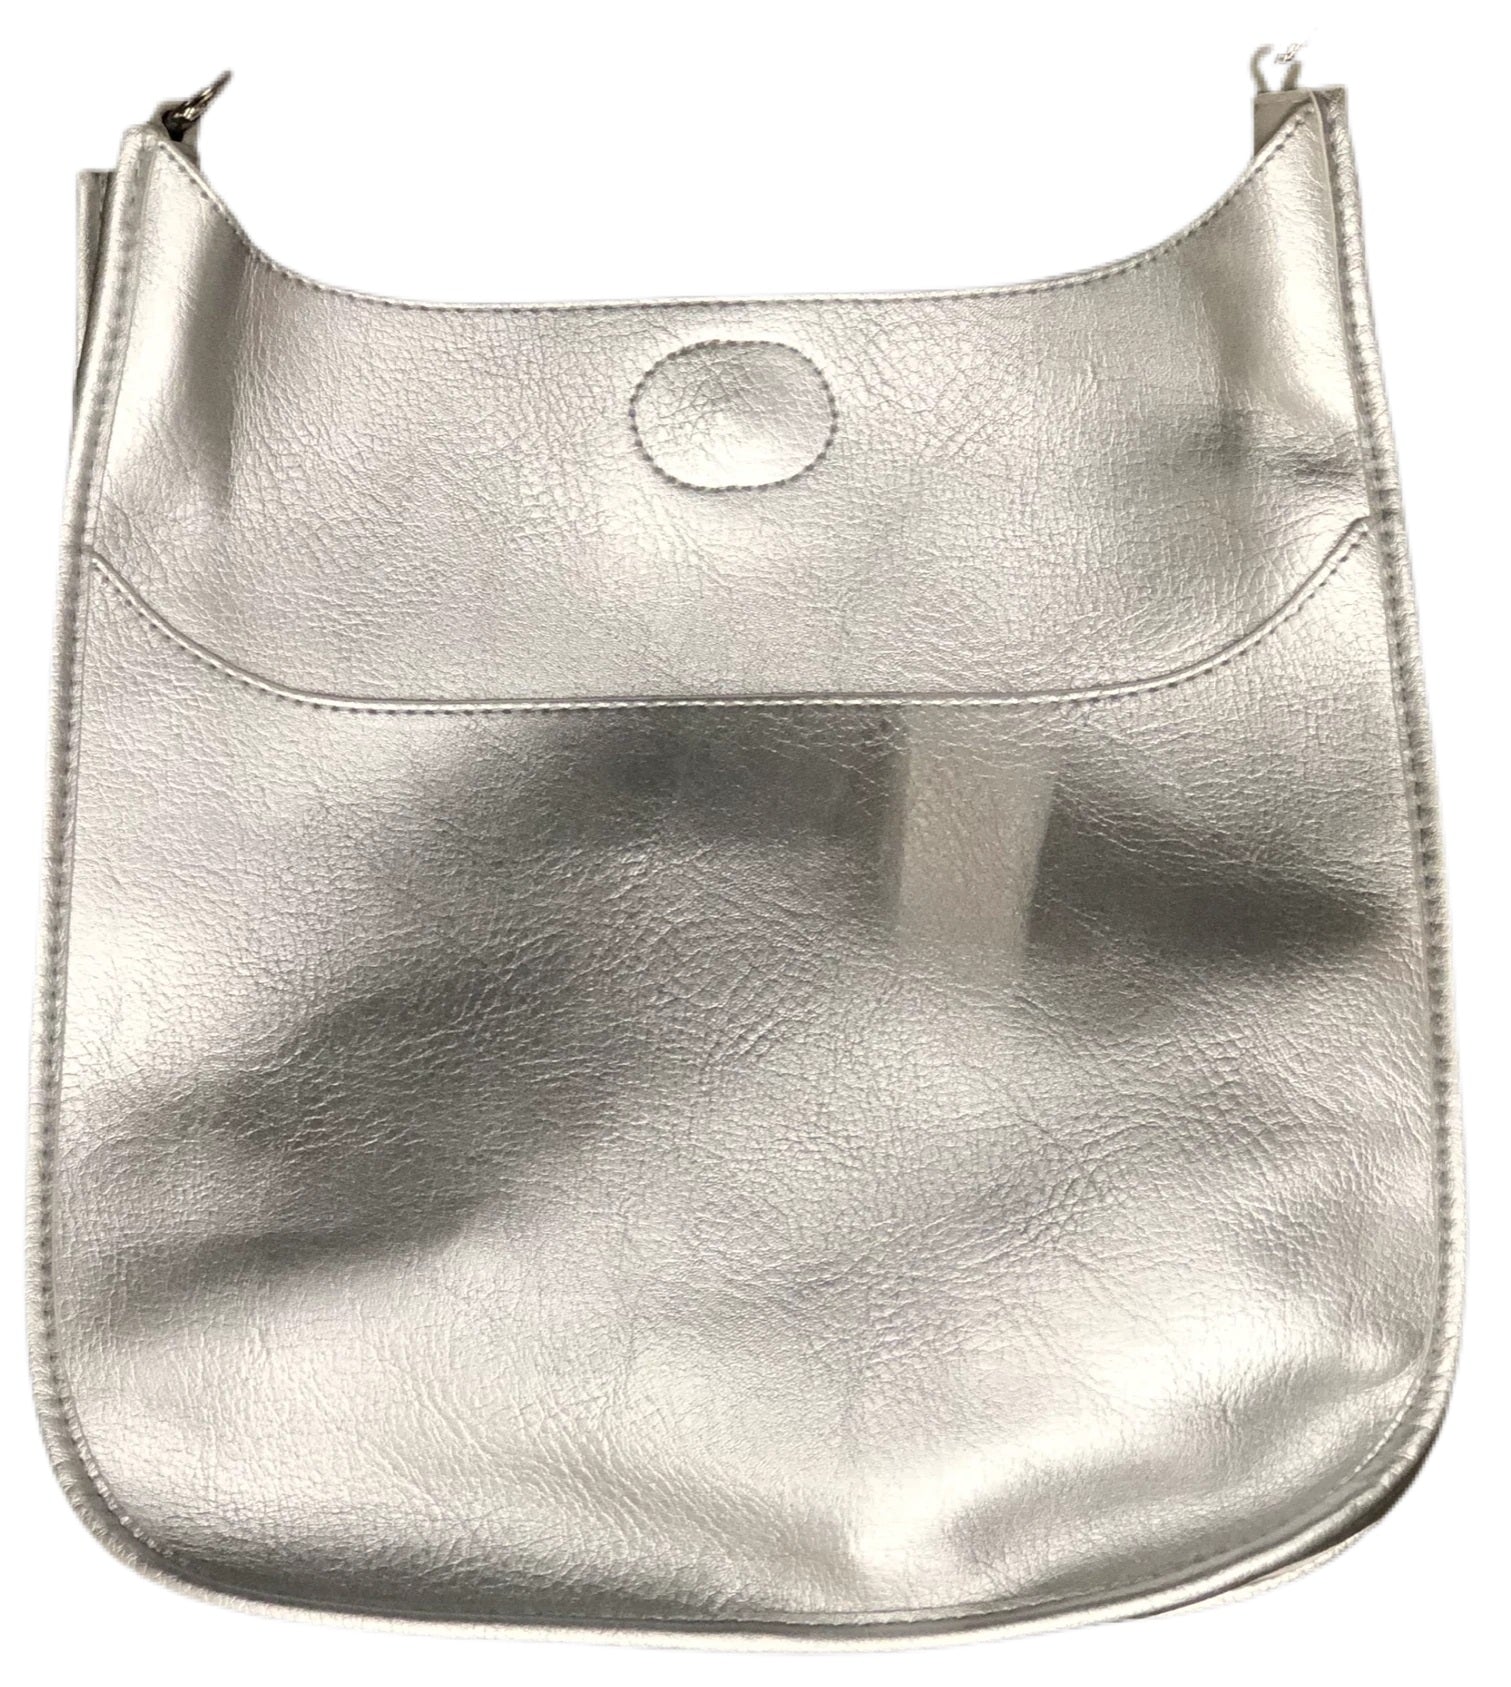 DOURR Hobo Handbags Light Nylon Crossbody Bag for Women, Multi Compartment Tote Purse Bags